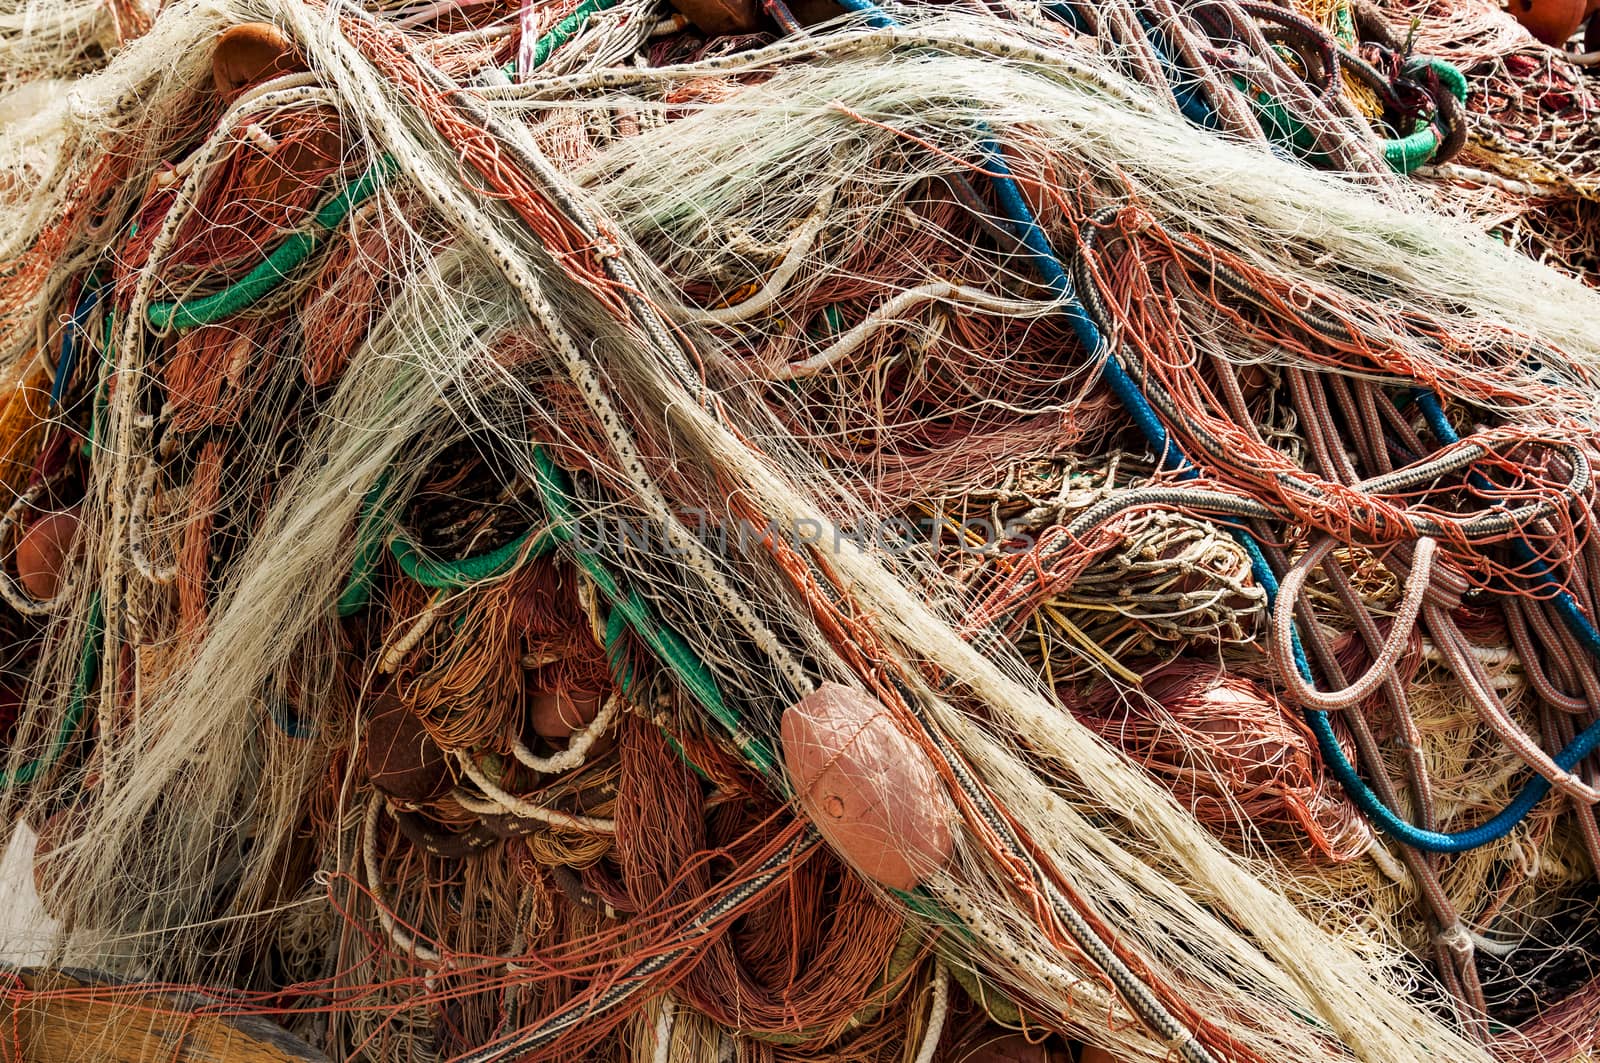 colored fishing net used by fishermen in Mediterranean sea